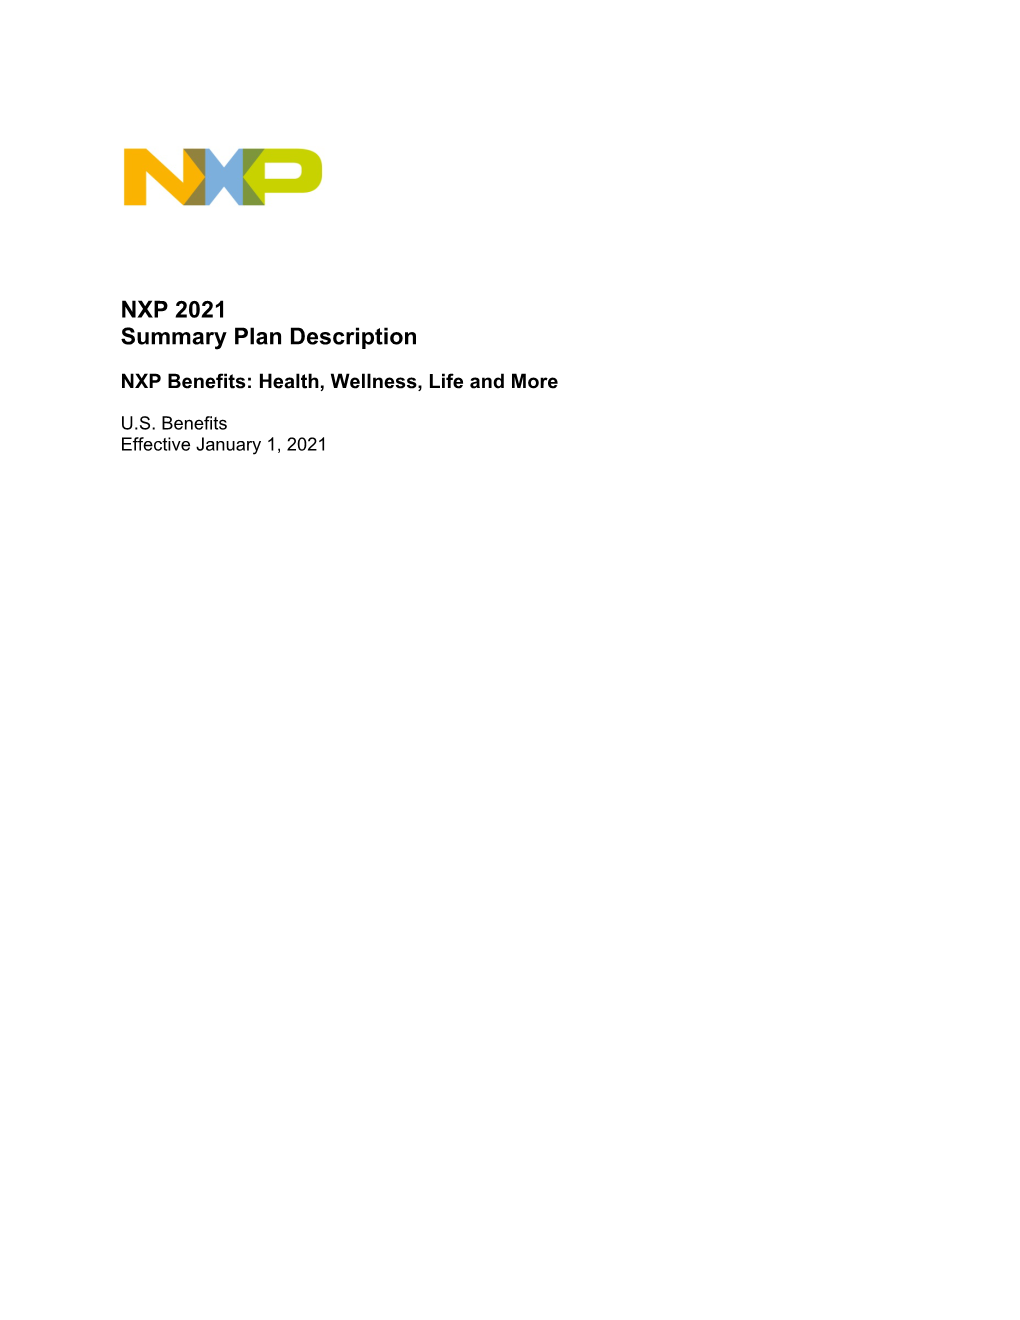 NXP 2021 Summary Plan Description